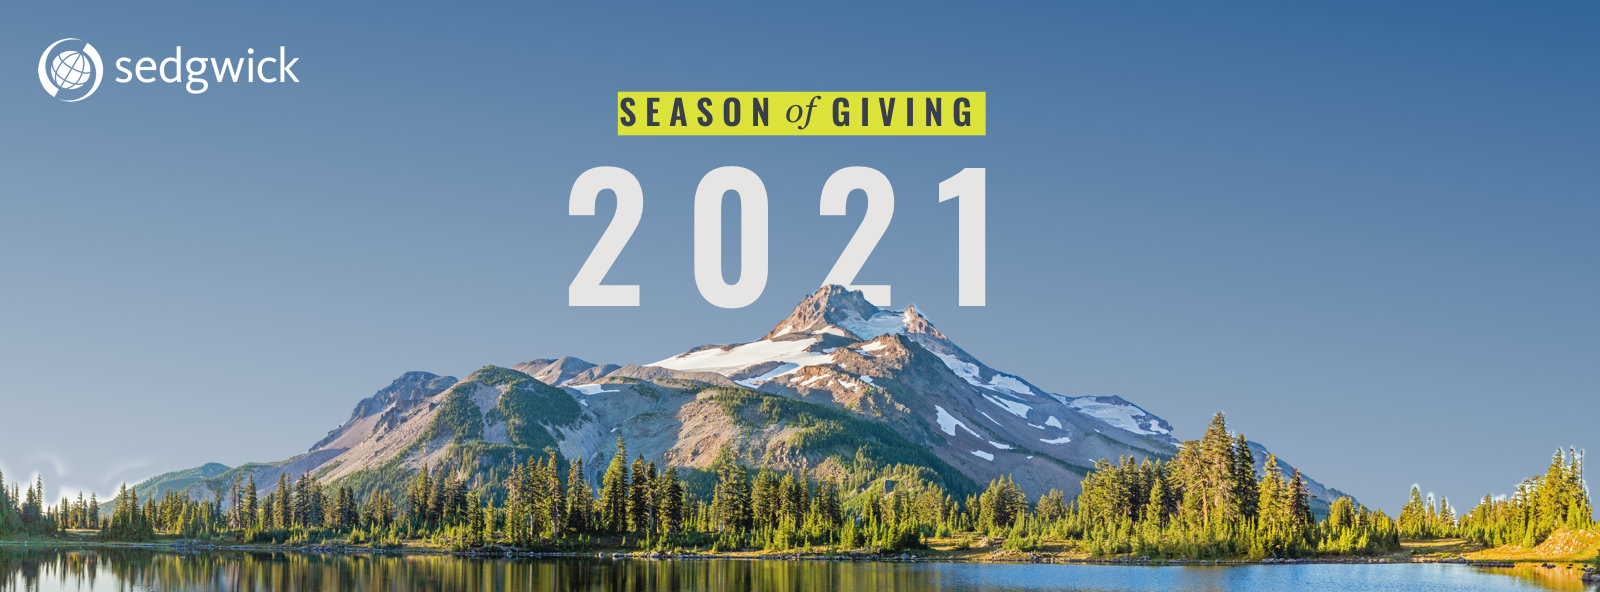 2021 season of giving 